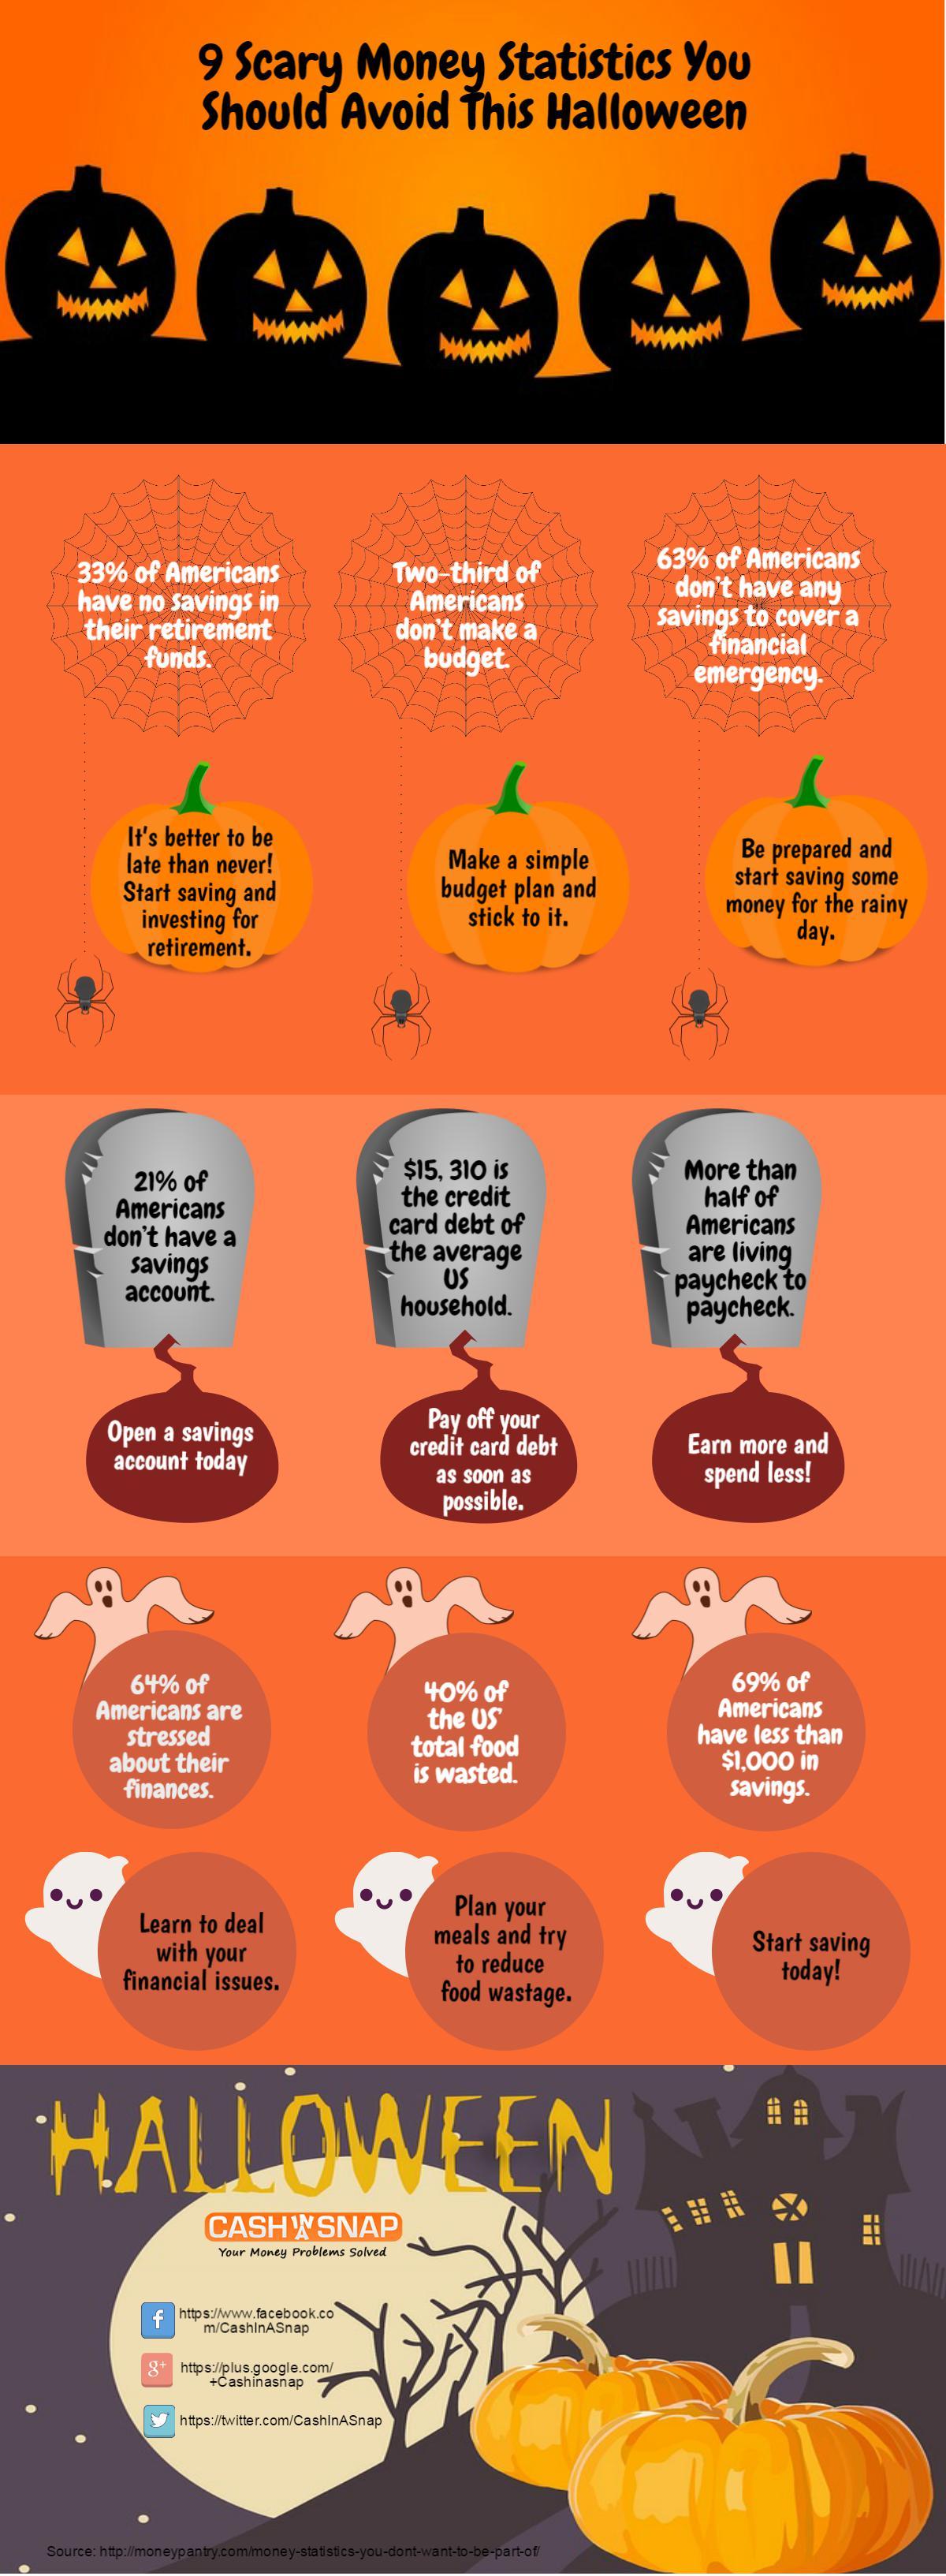 Scary Money Statistics For Halloween